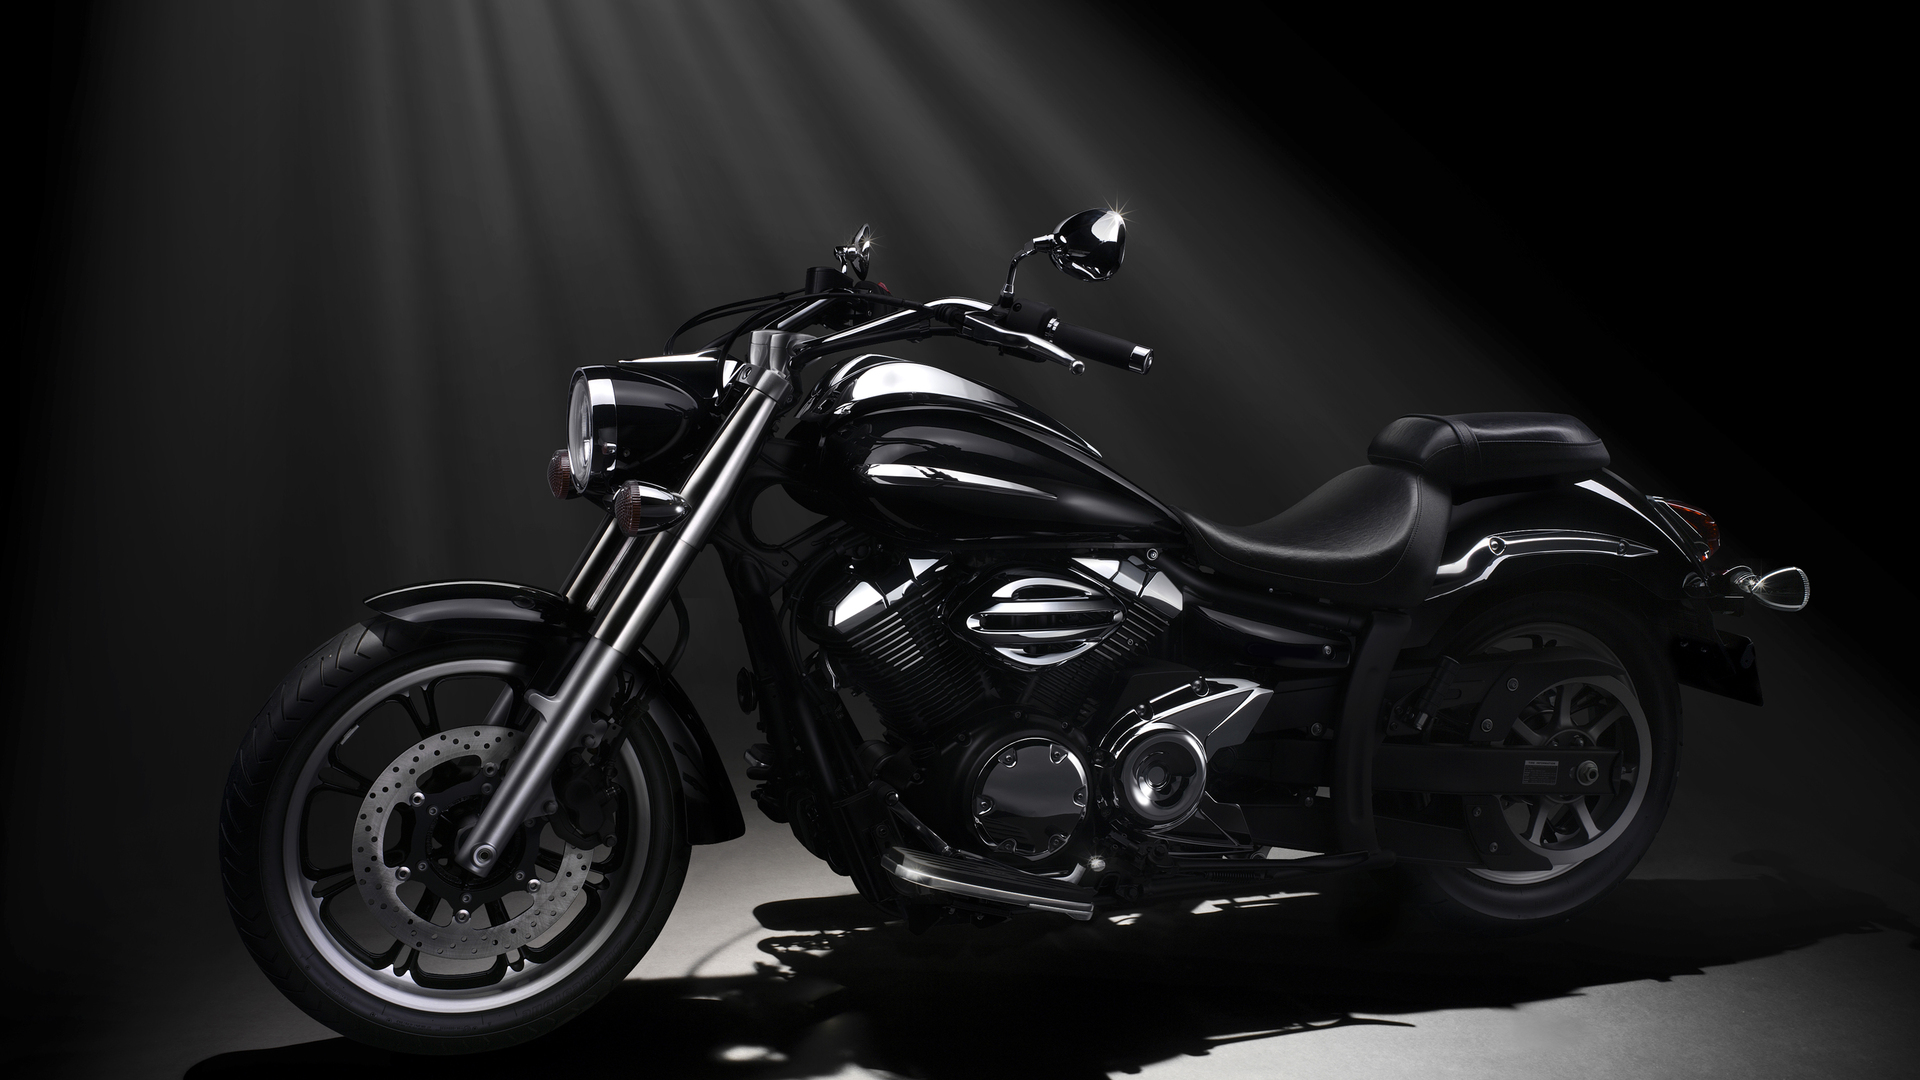 Download wallpaper: black motorcycle, desktop wallpapers, large